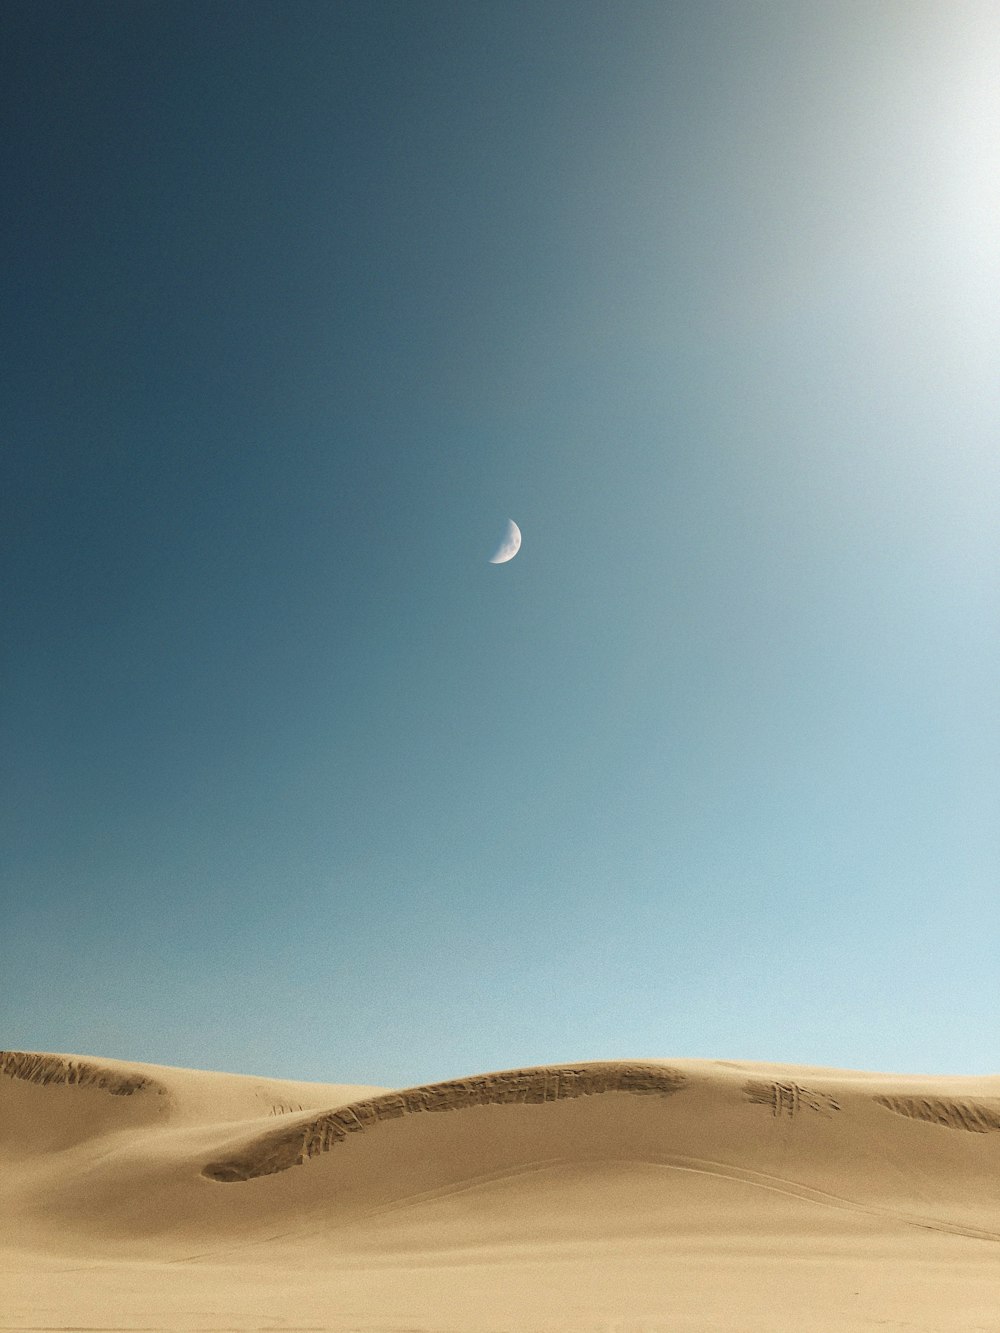 Best Desert Sky Pictures [HD] | Download Free Images on Unsplash